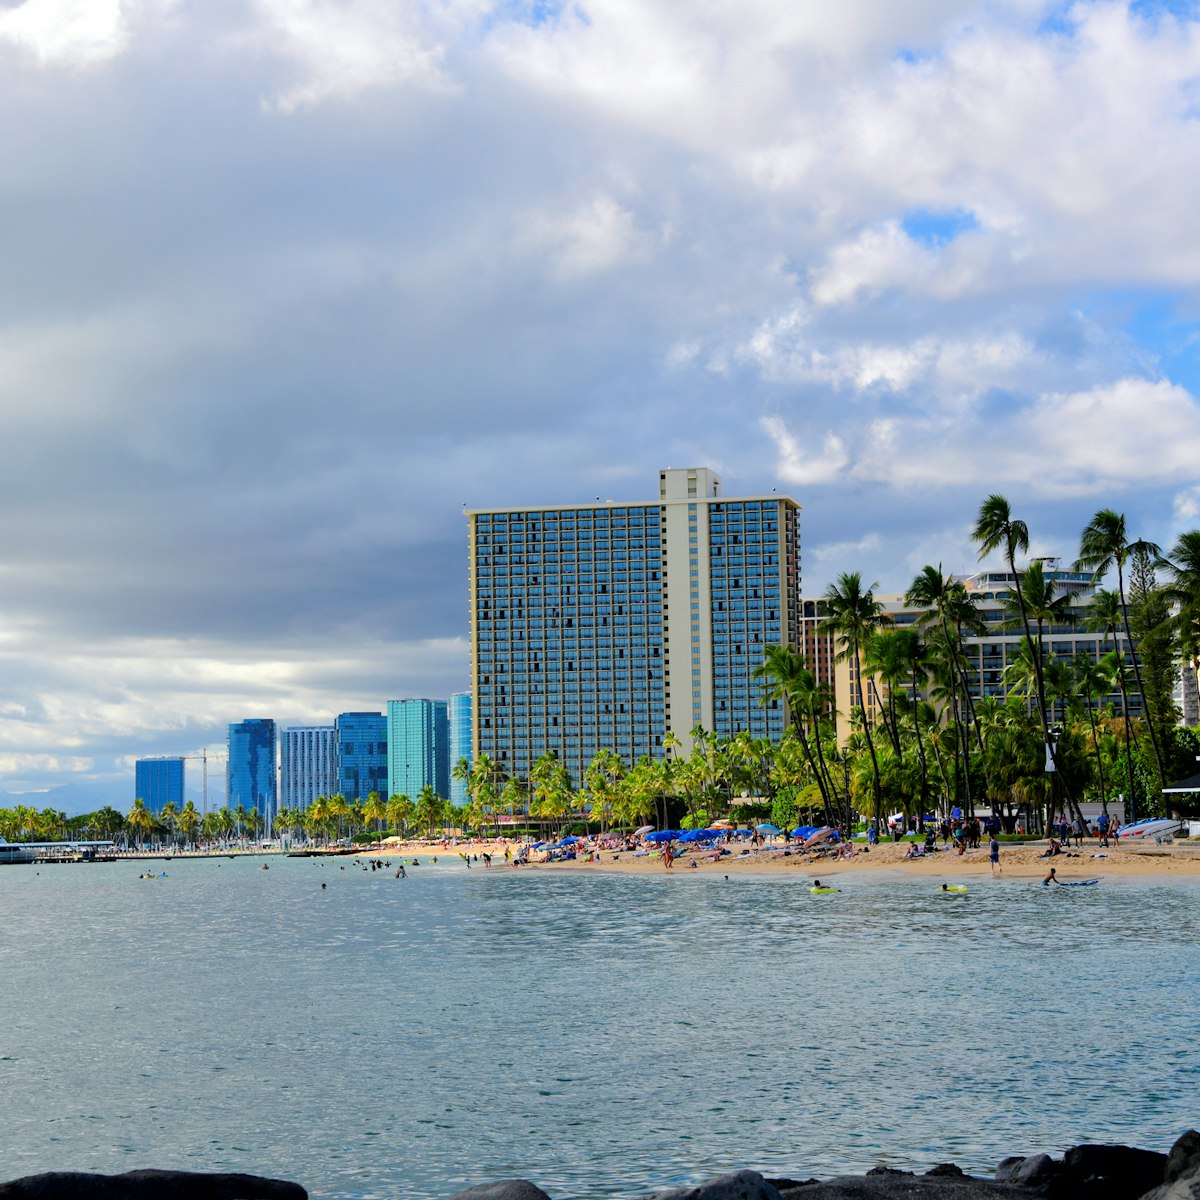 Waikiki, Honolulu, Oahu, Hawaii, USA: beach and Fort DeRussy Boardwalk / Beach Park - Rainbow Tower in the center.
1521875778